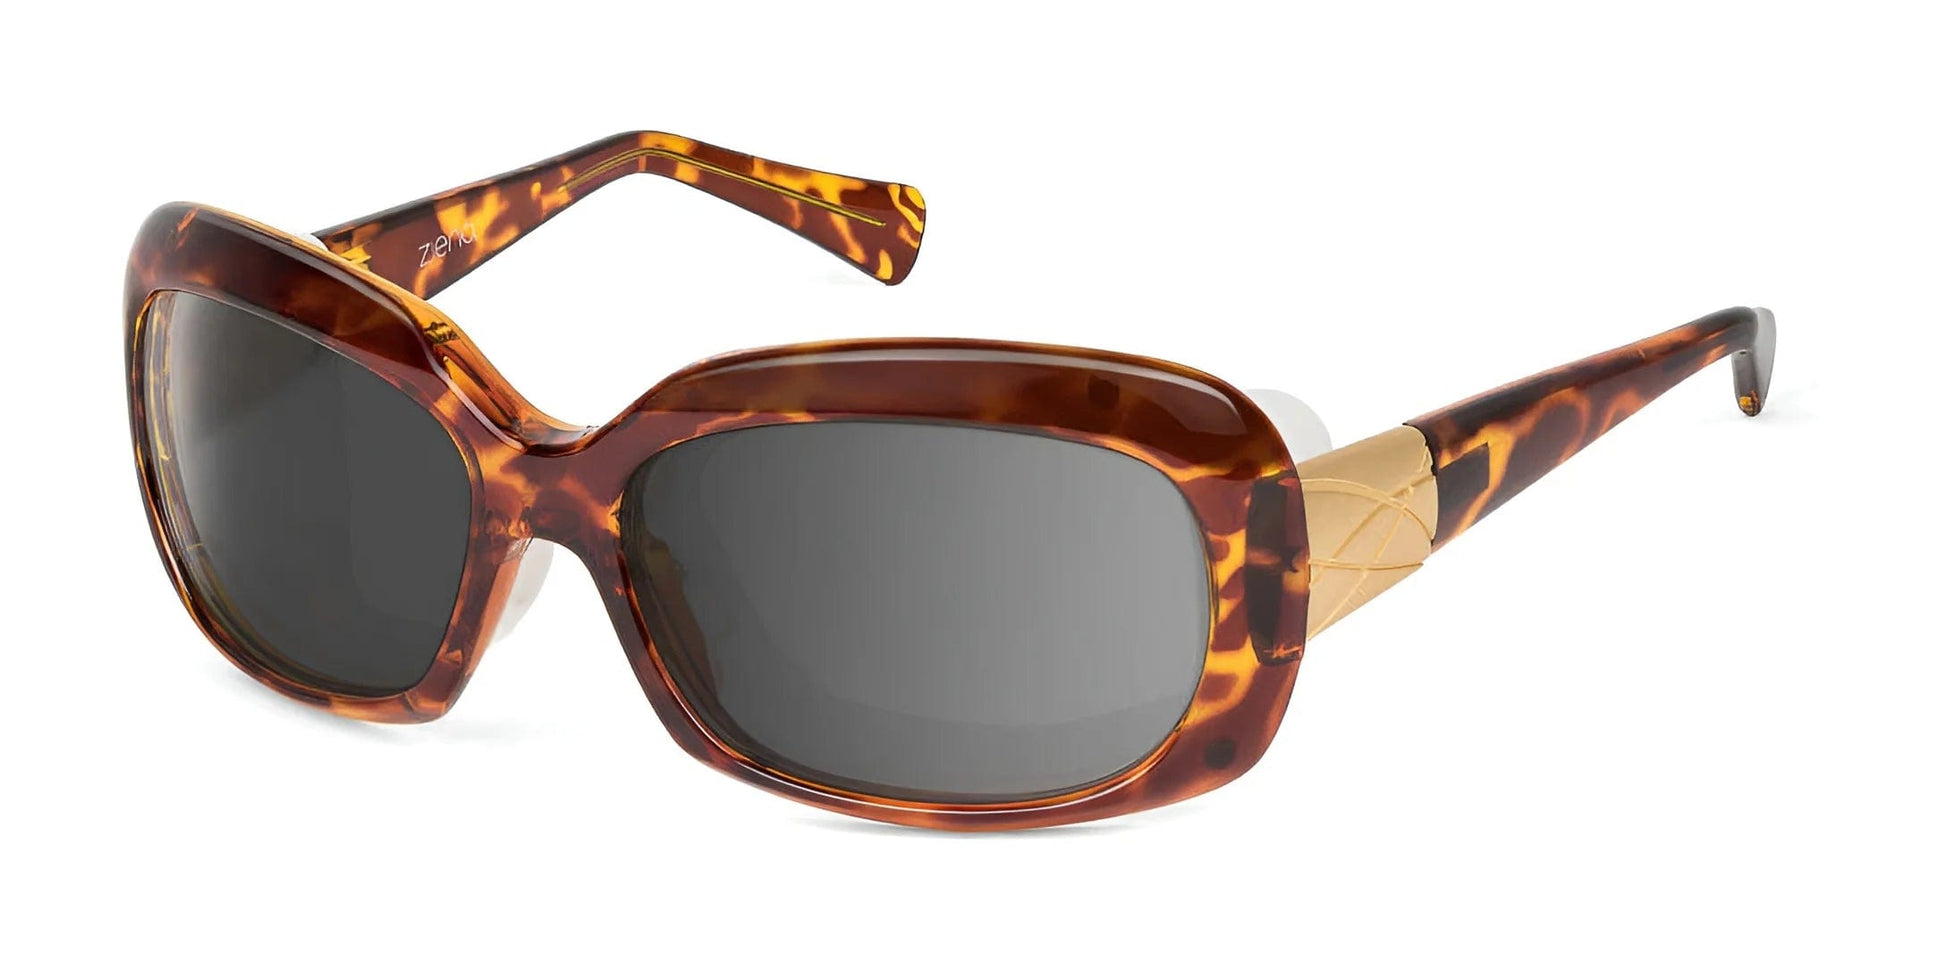 Ziena Oasis Sunglasses Tortoise / DARKshift™ Photochromic - Clr to DARK Gray / Frost